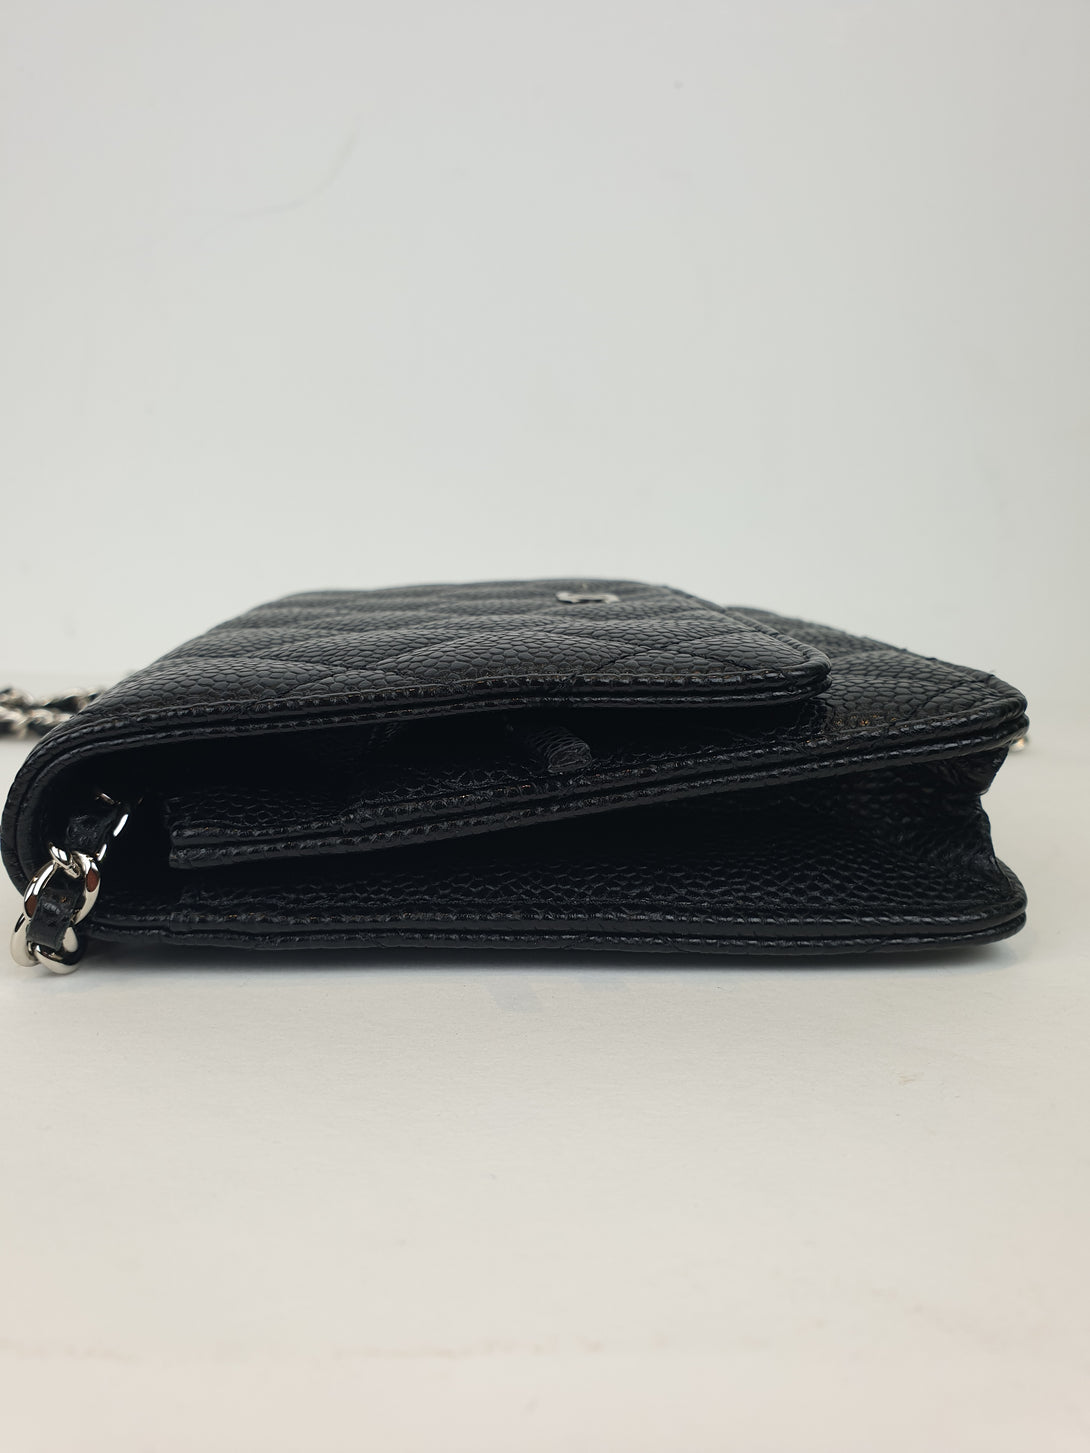 Chanel Black "Wallet on Chain" Crossbody - As seen on Instagram 29/07/20 - Siopaella Designer Exchange